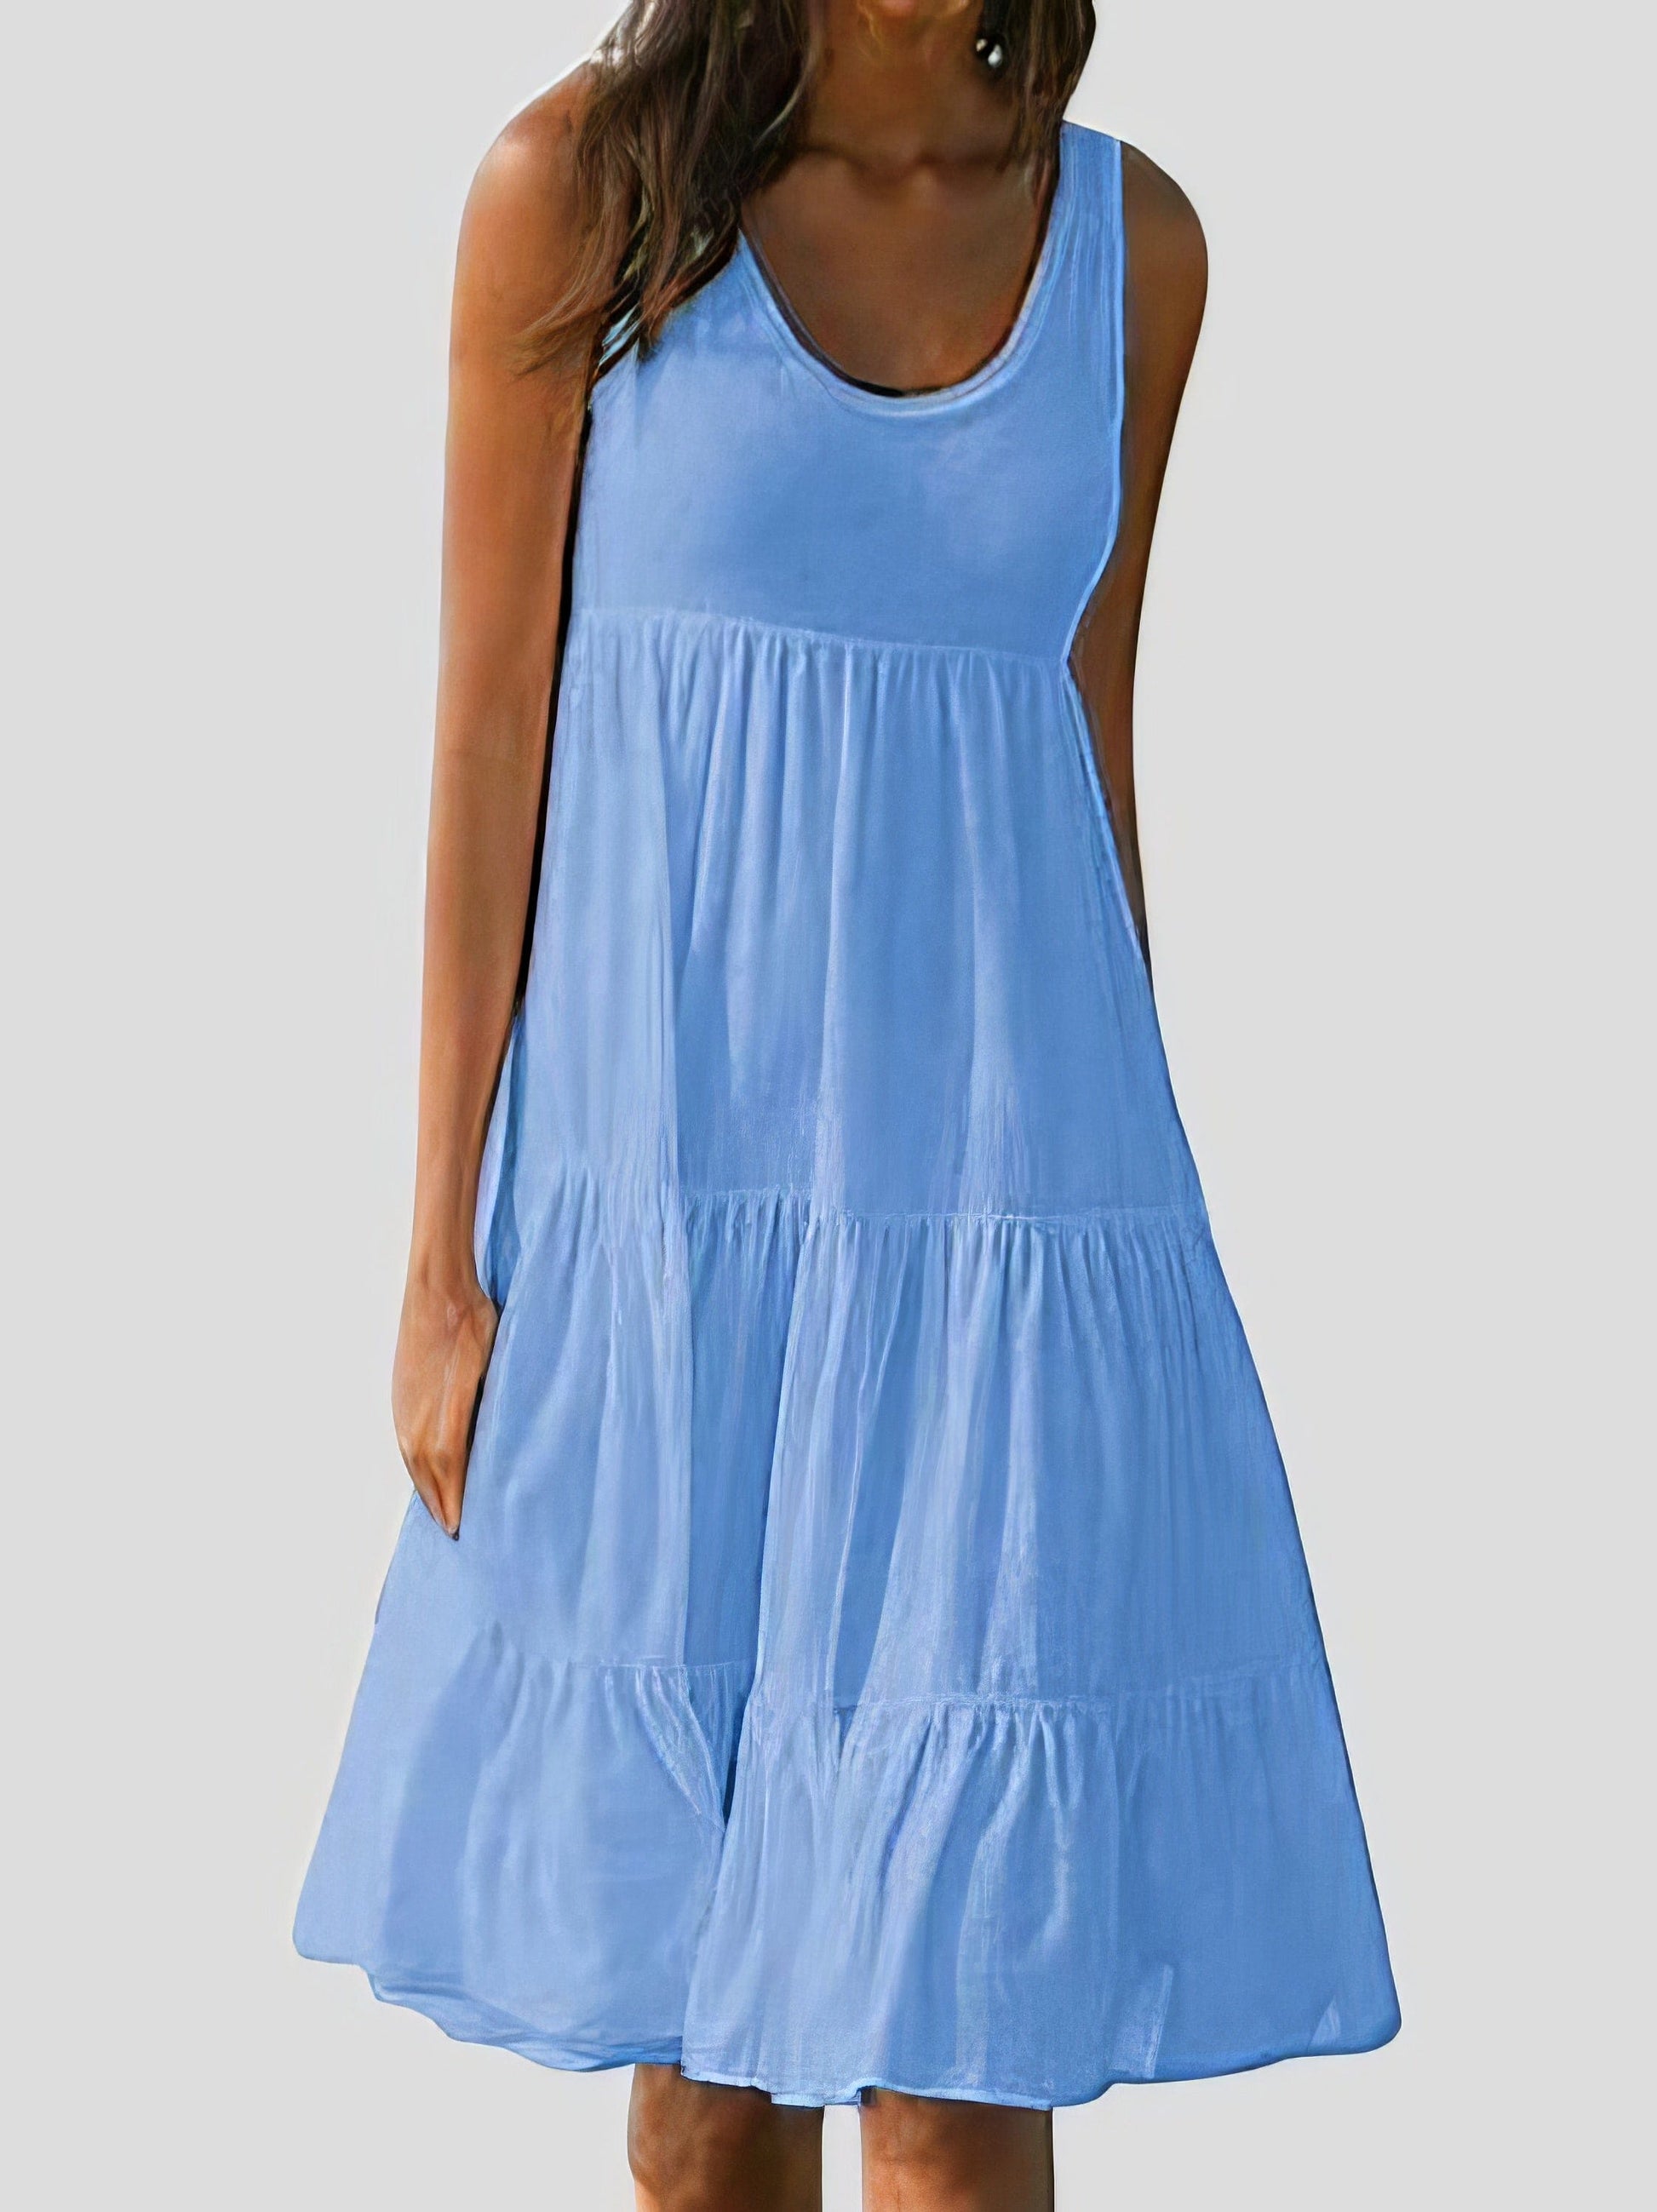 MsDressly Mini Dresses Sleeveless Round Neck Stitching Beach Dress DRE2107031585BLUS